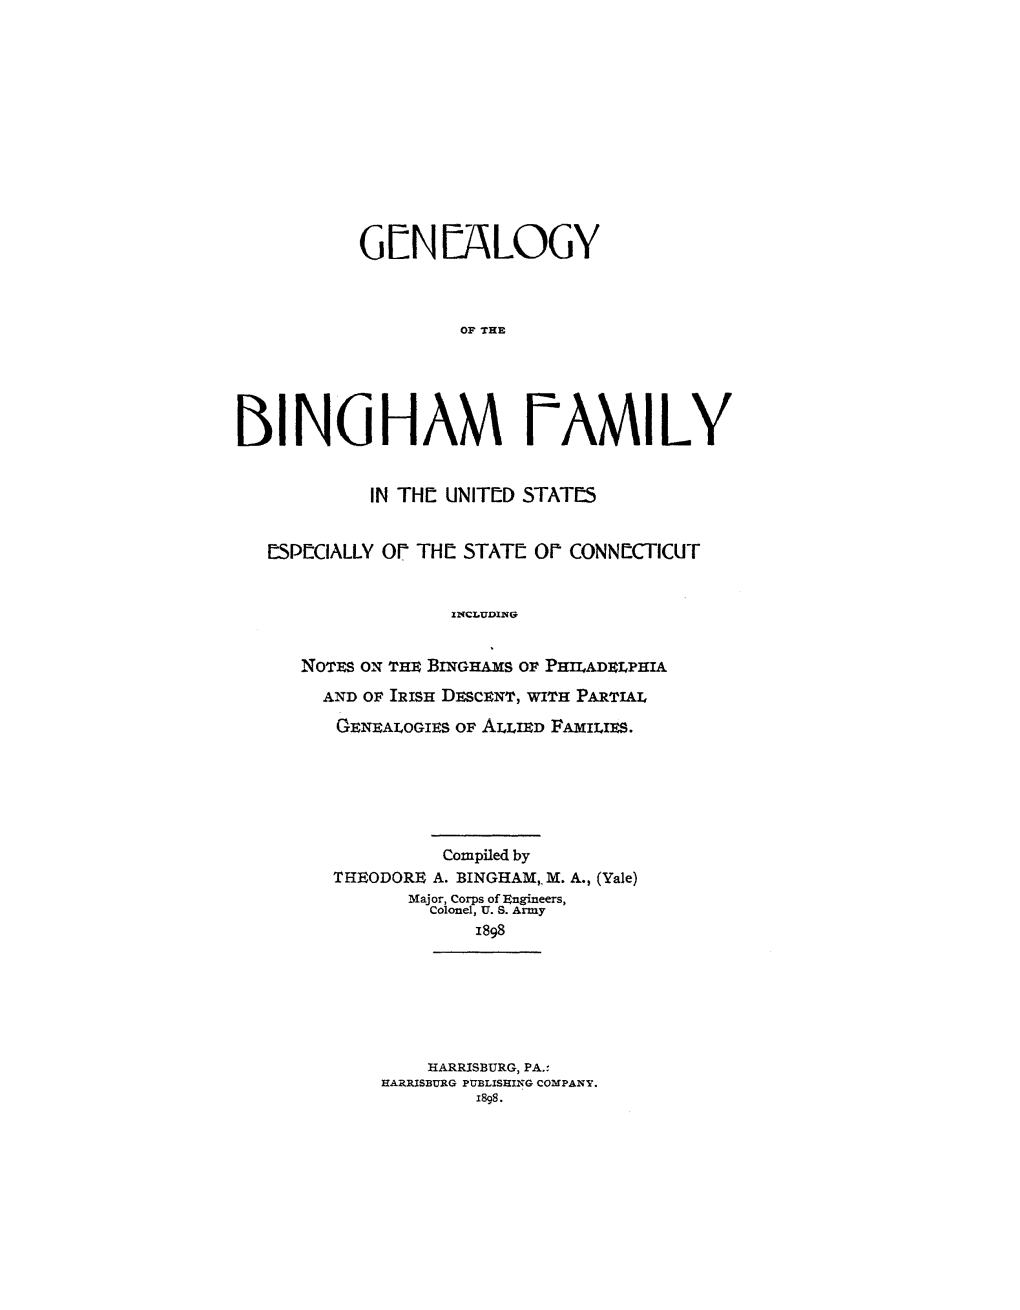 Genealogy of the Bingham Family